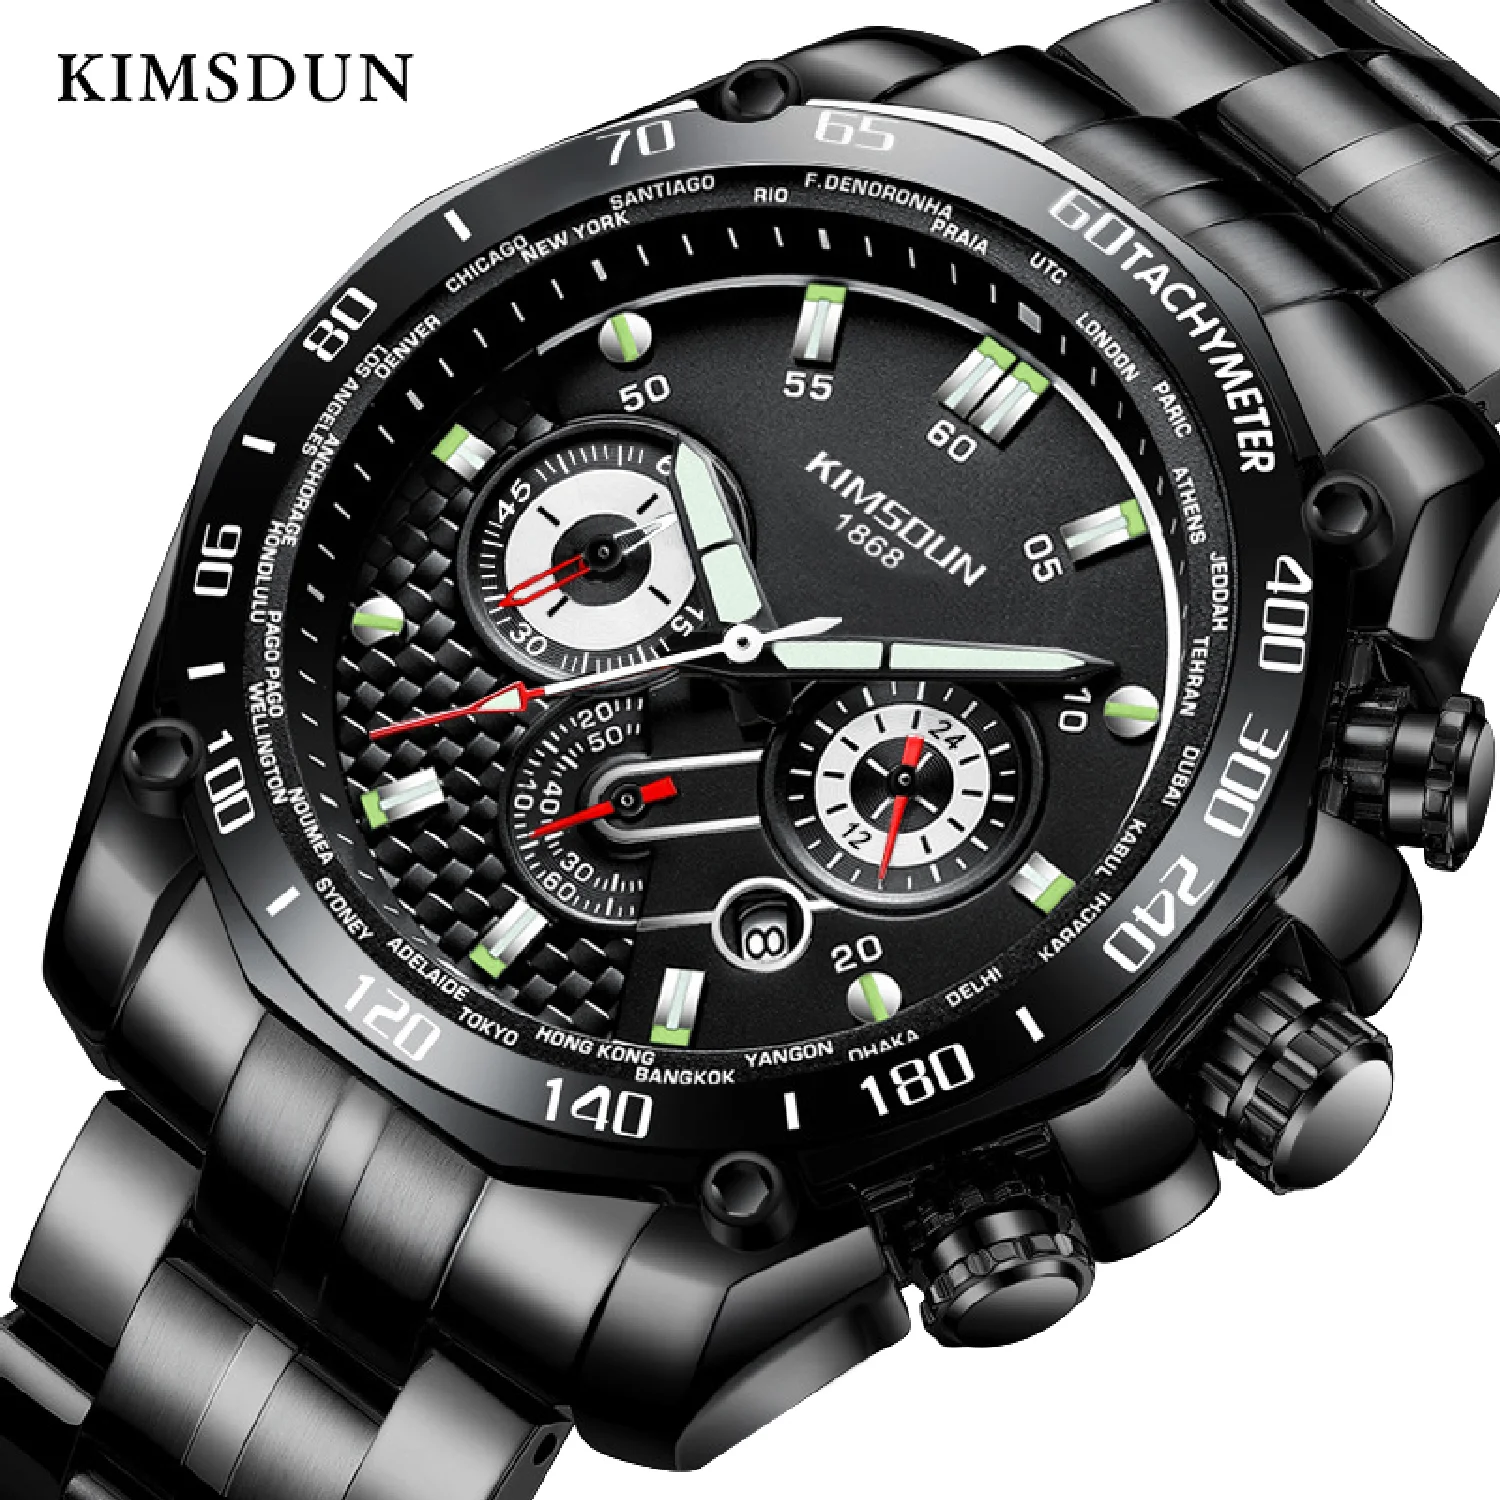 

KIMSDUN Waterproof Business Men's Watch Date Display Fashion Sports Quartz Chronograph Watch Stainless Steel Strap Relogio Clock